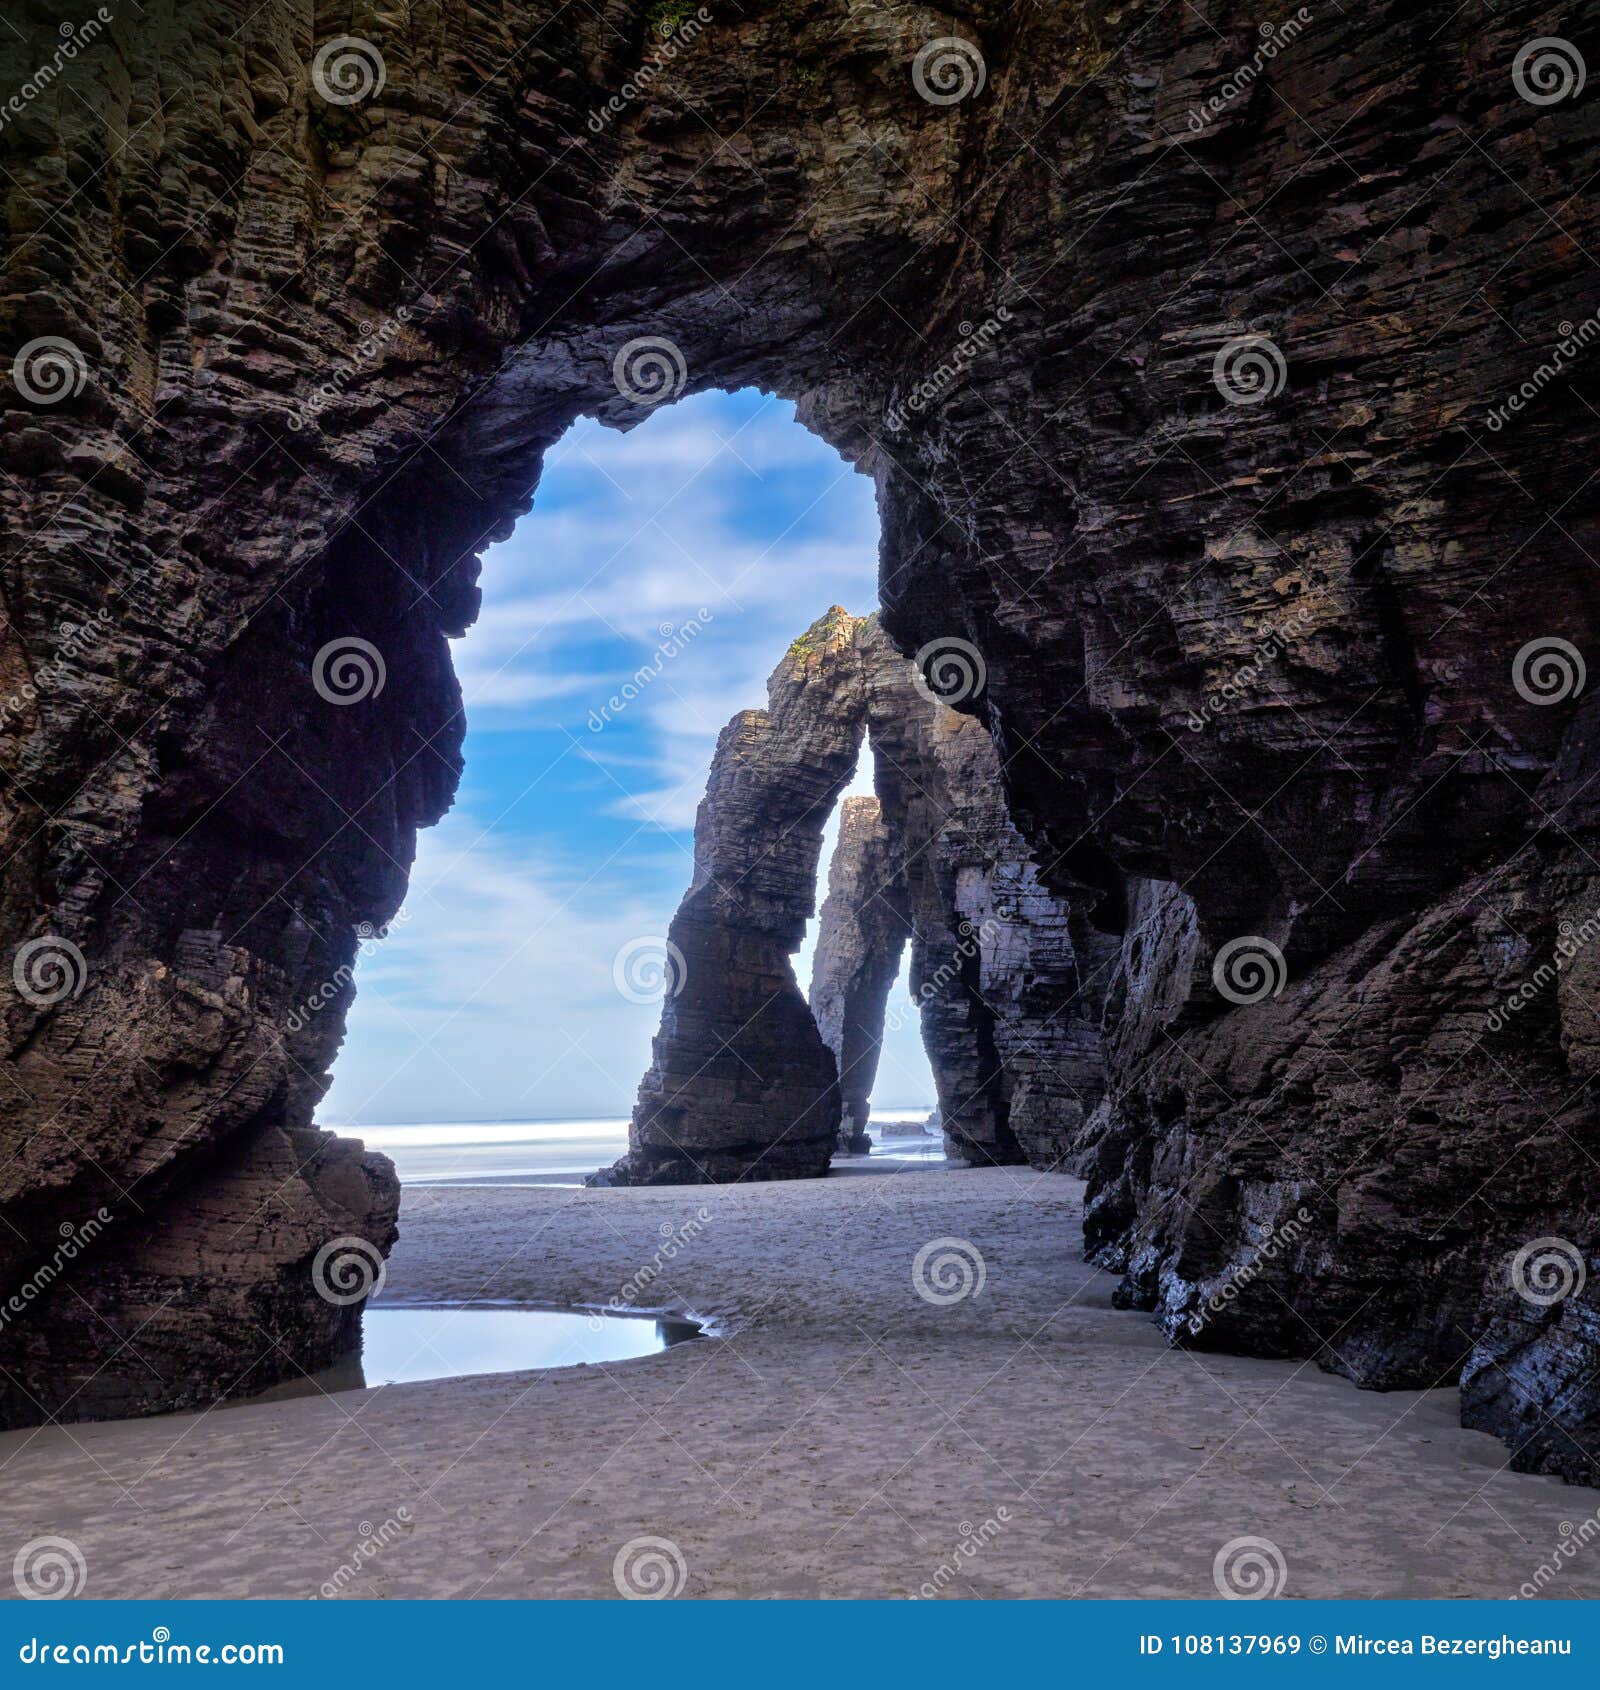 beautiful stone arches on playa de las catedrales, spai